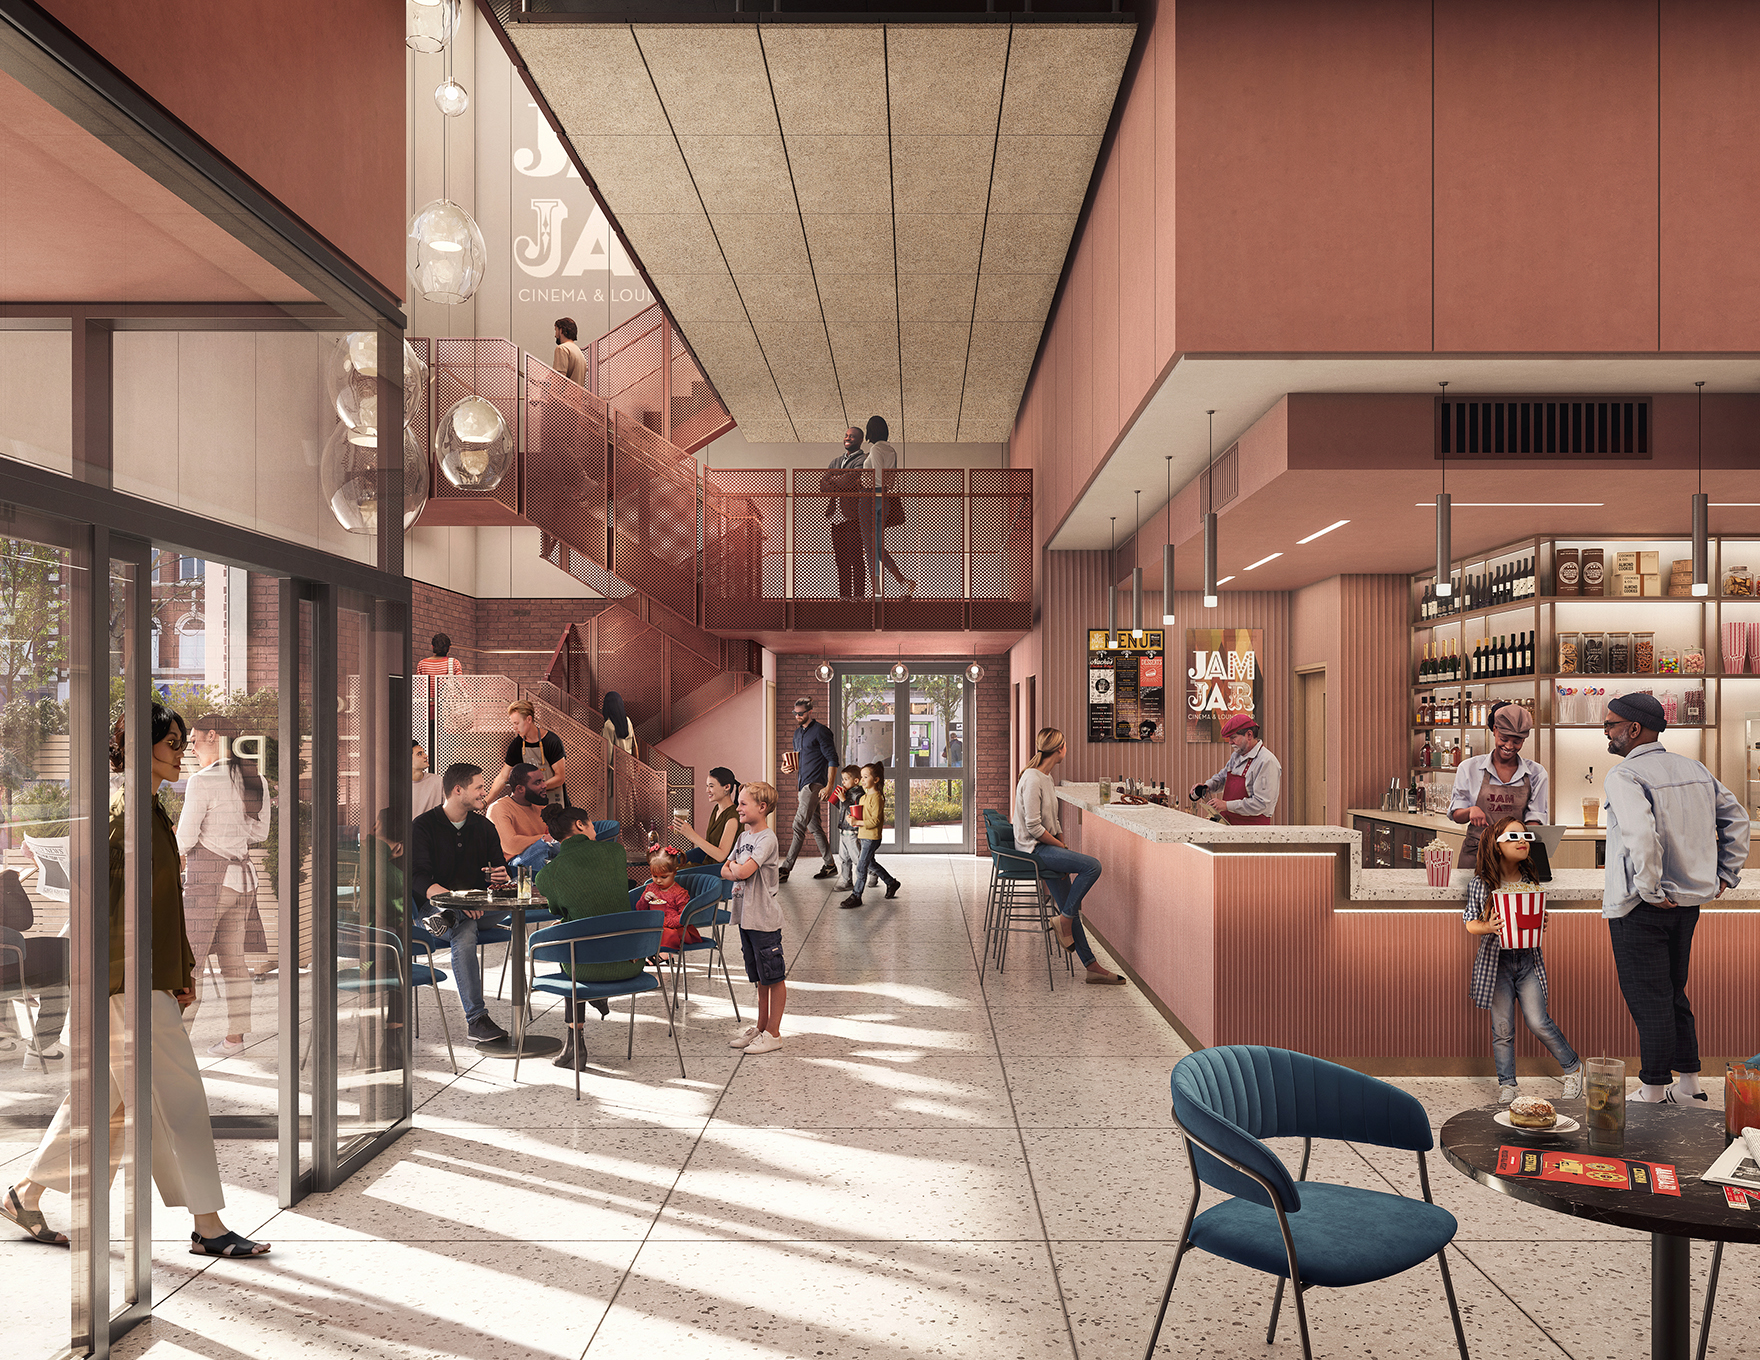 Blyth Culture Hub Market Place Cinema Cafe Construction Starts Faulknerbrowns Architects L